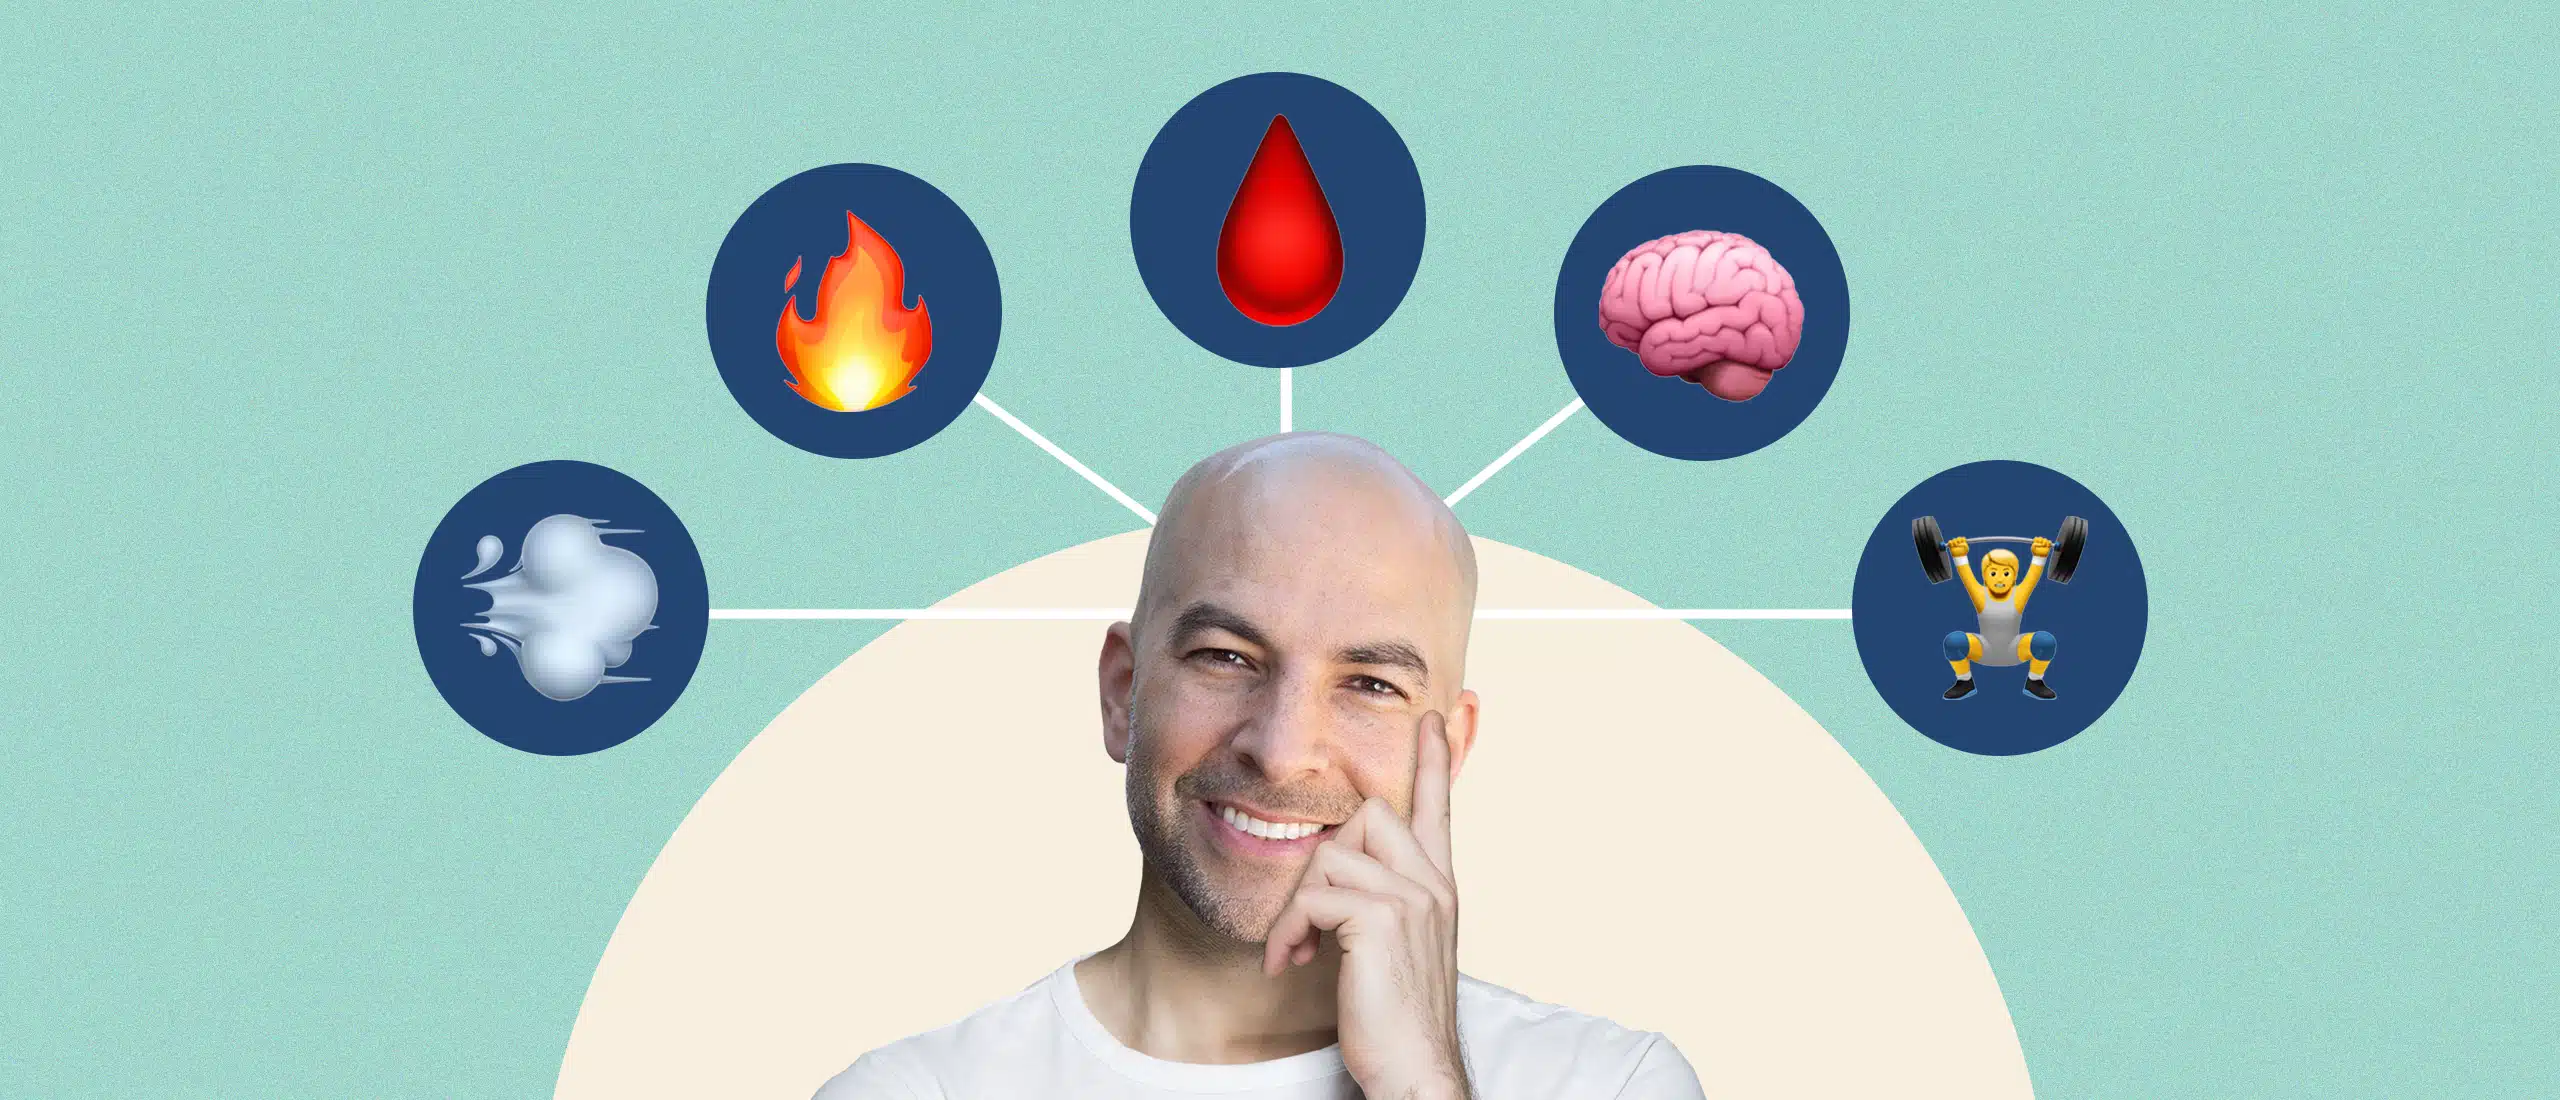 Peter Attia with five emojis around his head